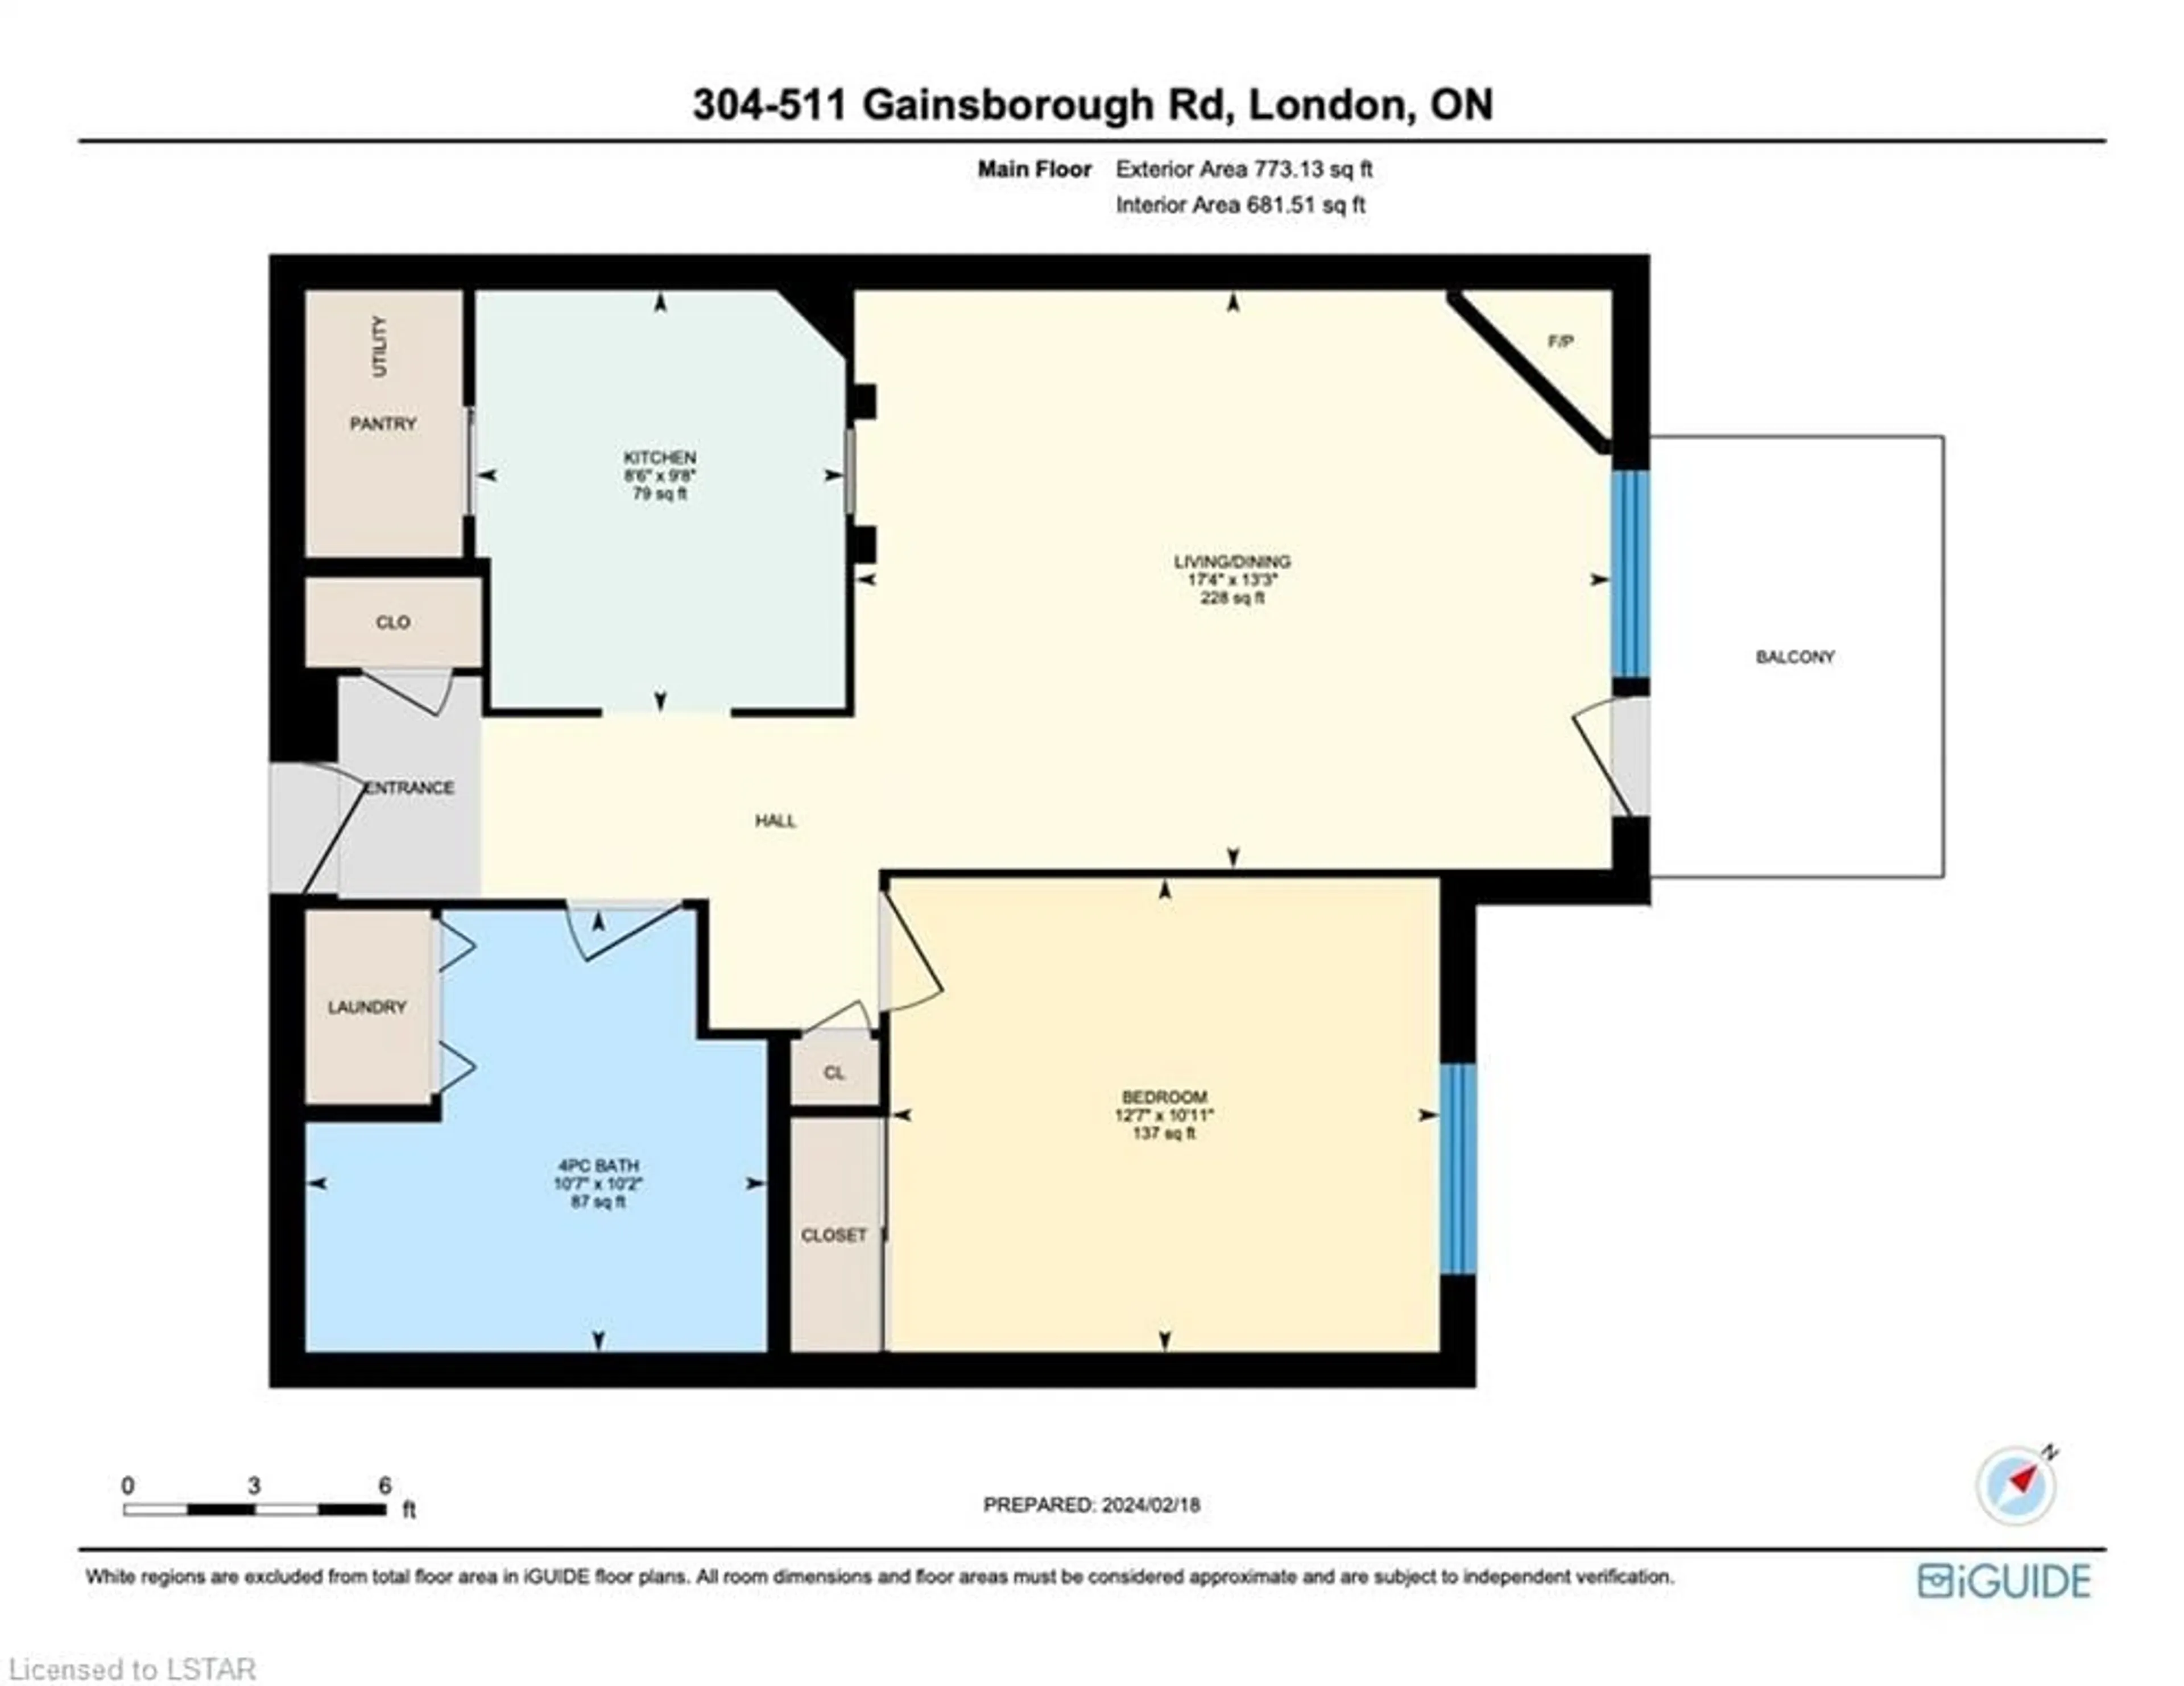 Floor plan for 511 Gainsborough Rd #304, London Ontario N6G 4Z5